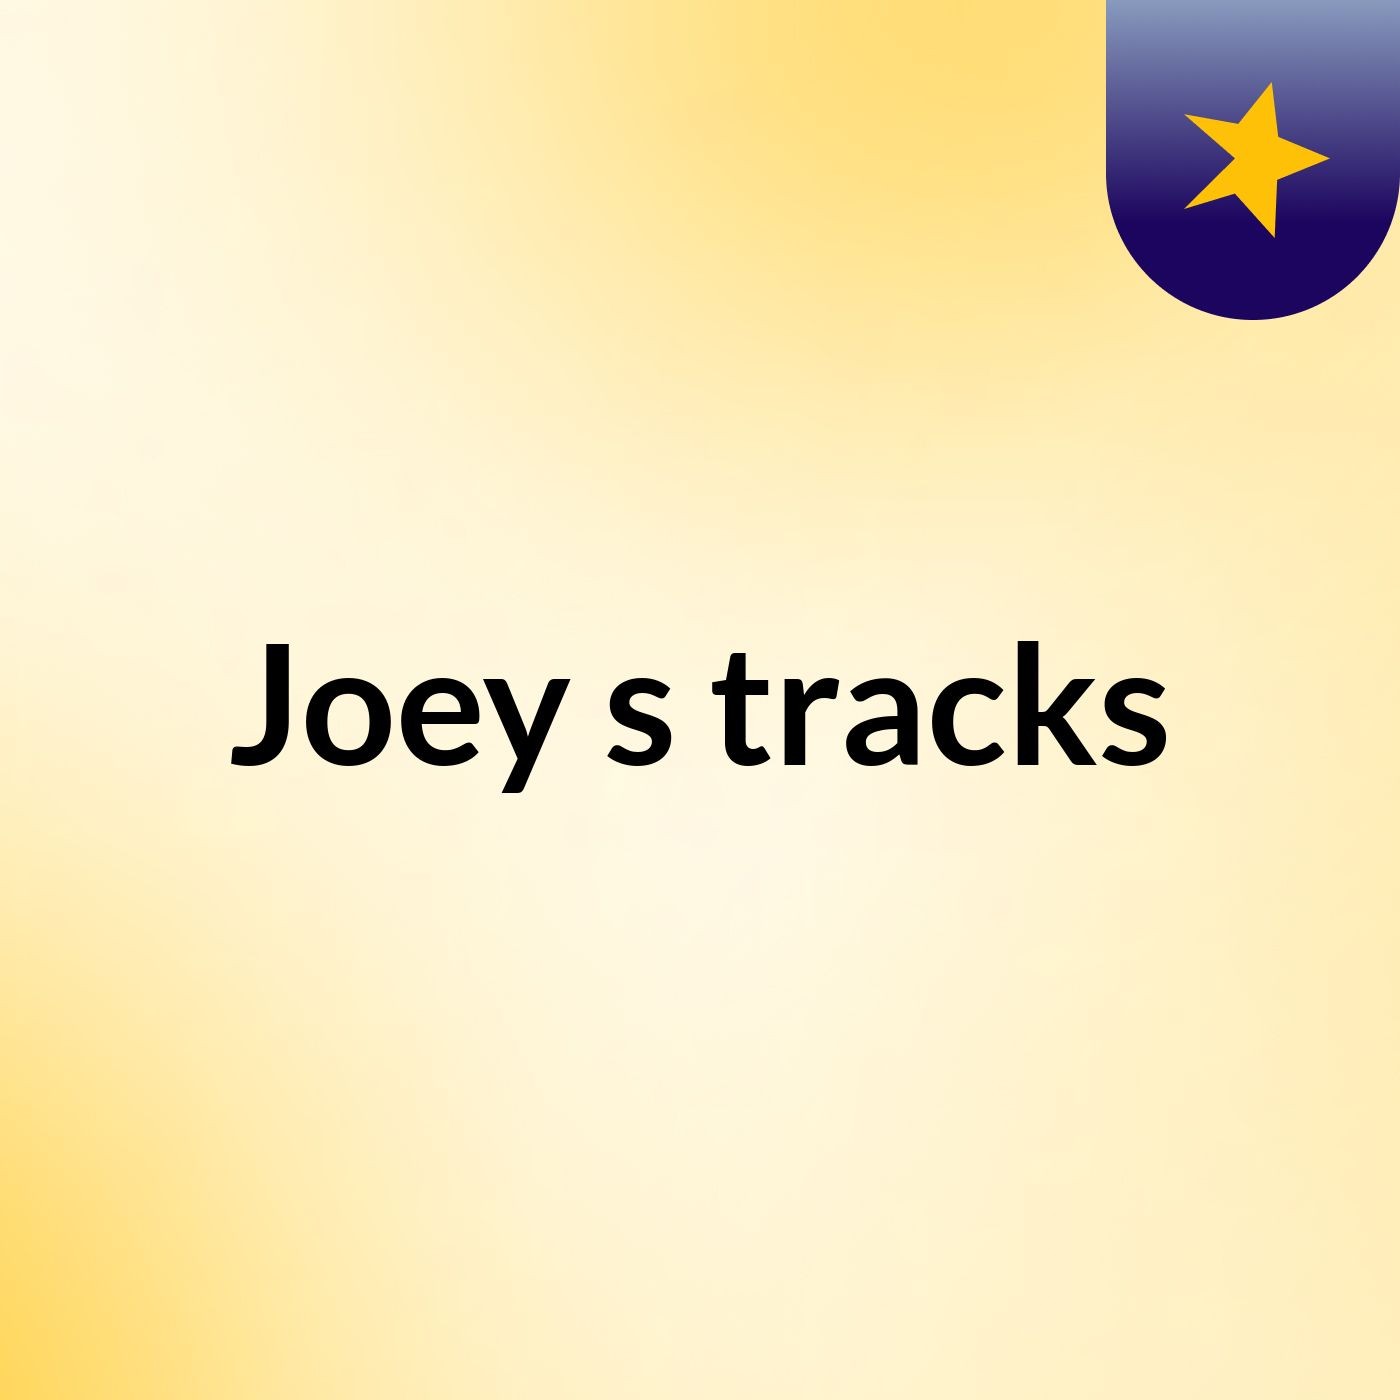 Joey's tracks